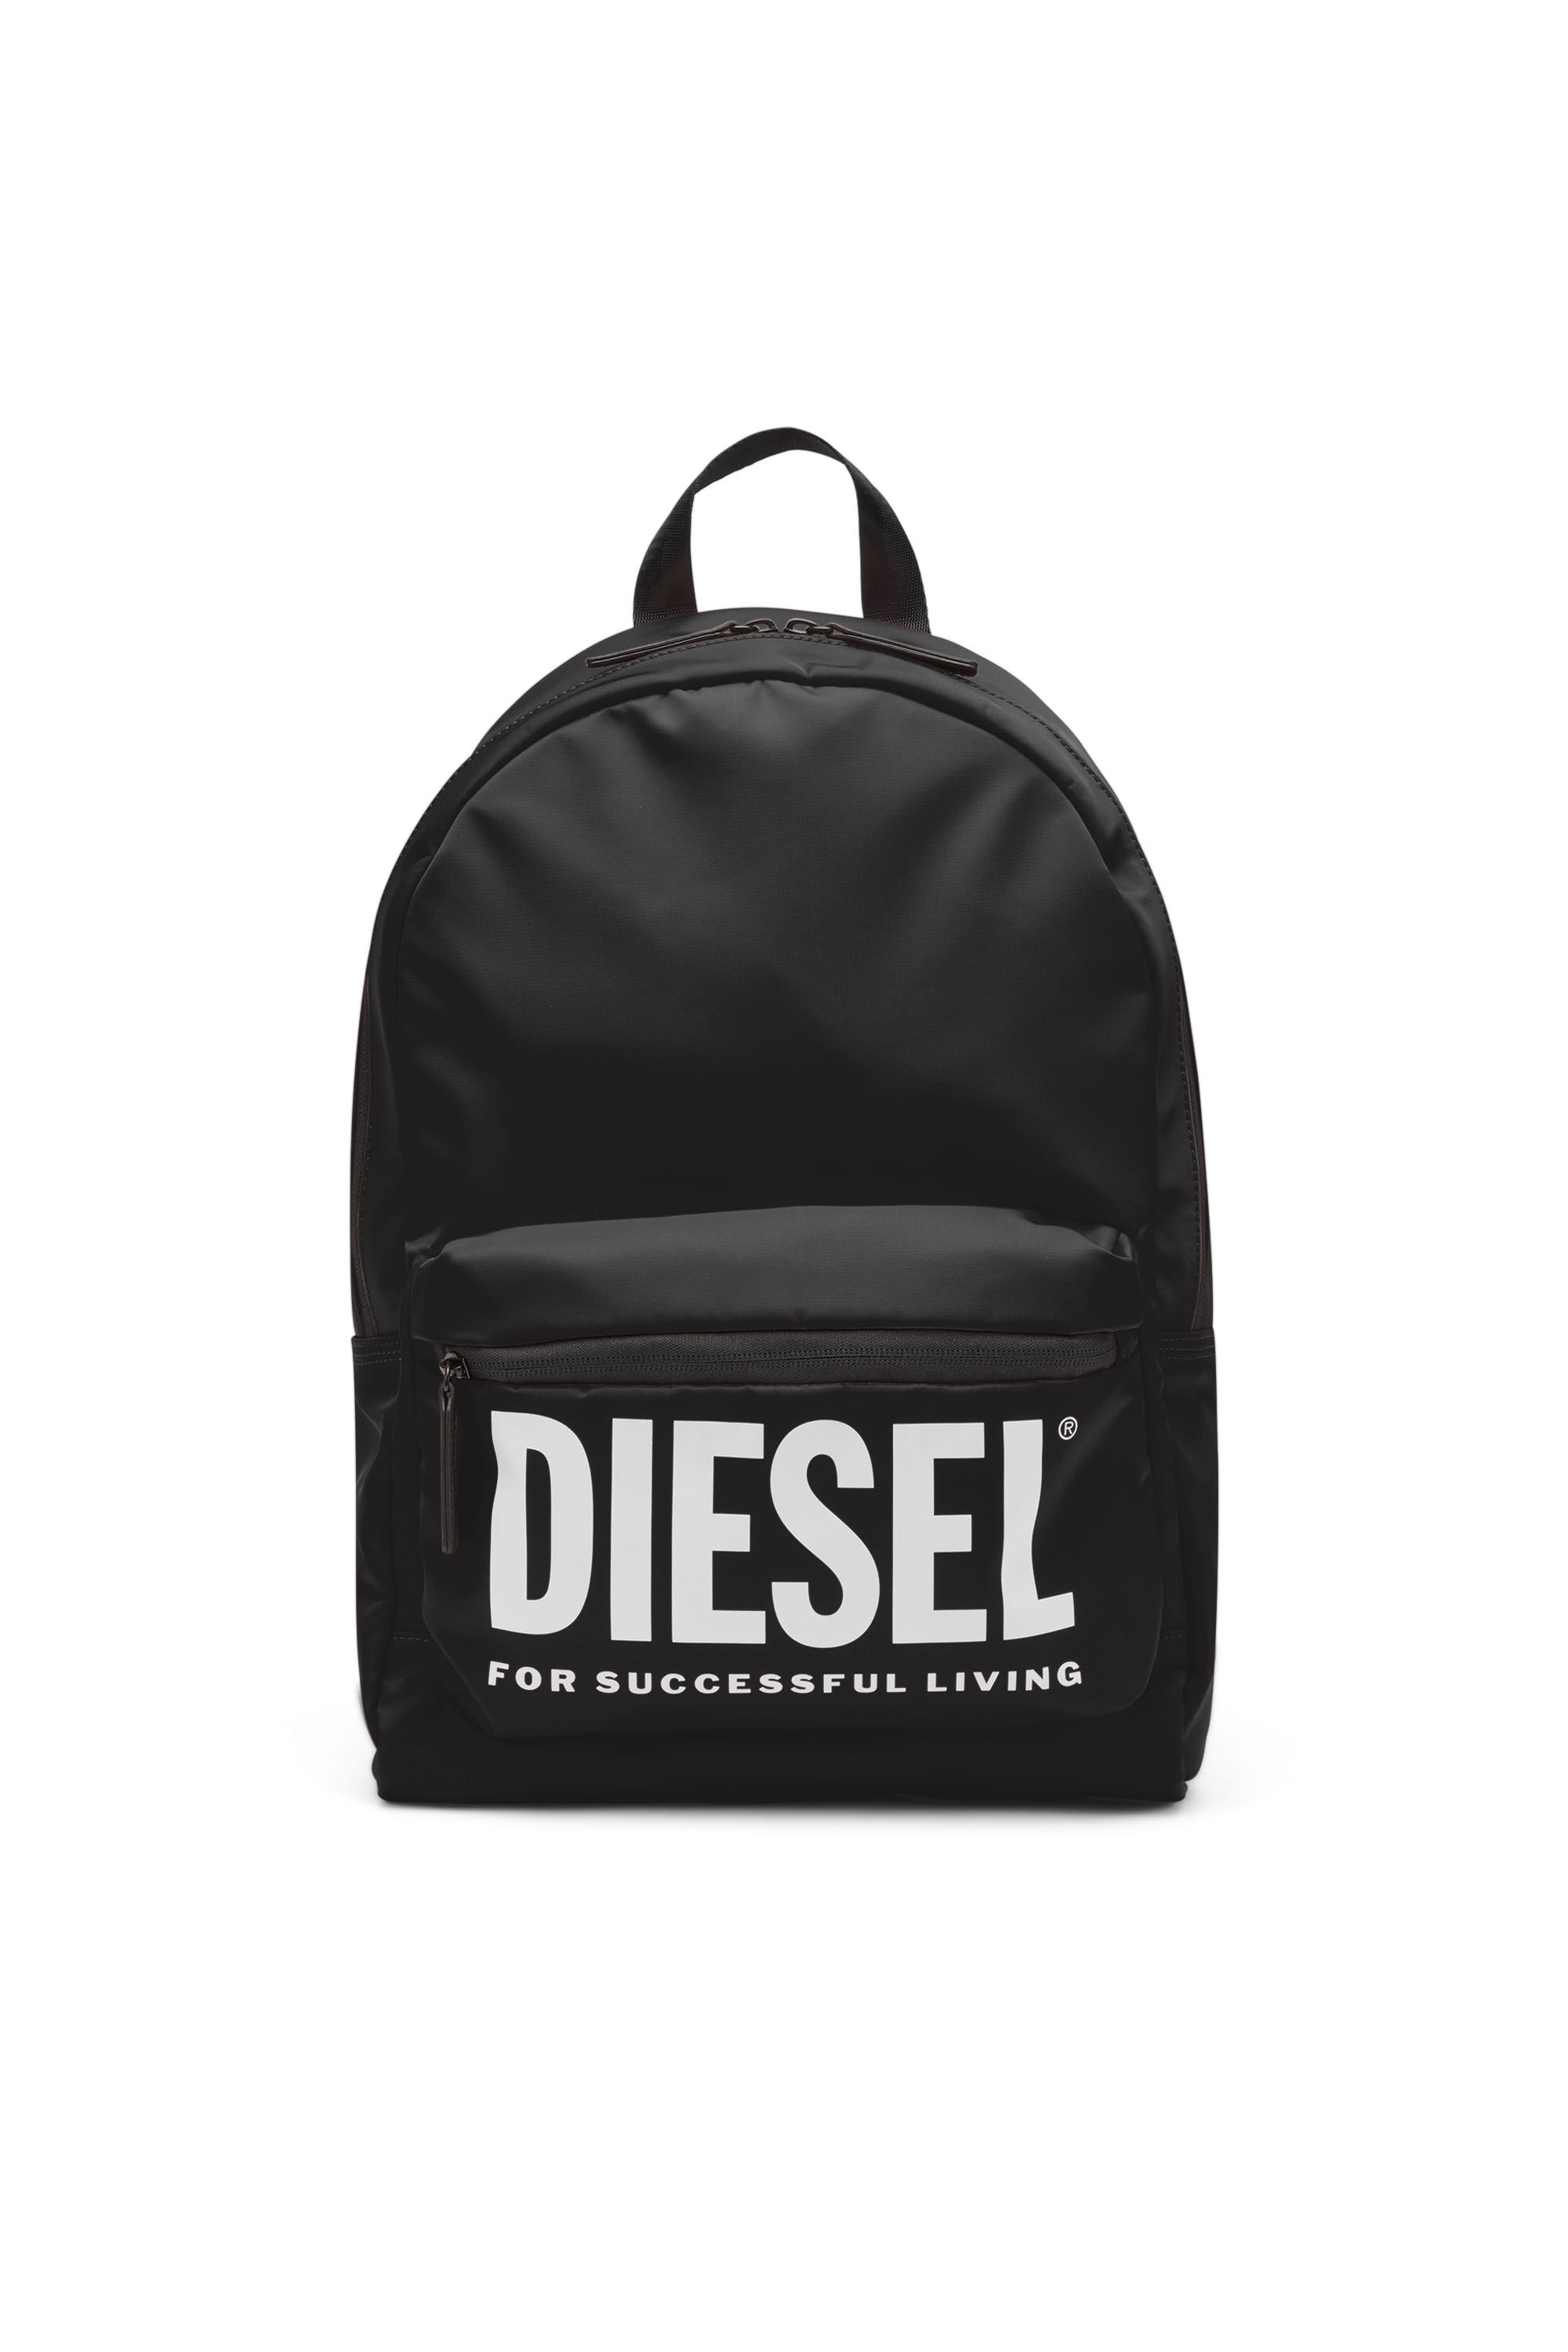 Diesel - WBACKLOGO, Black - Image 1